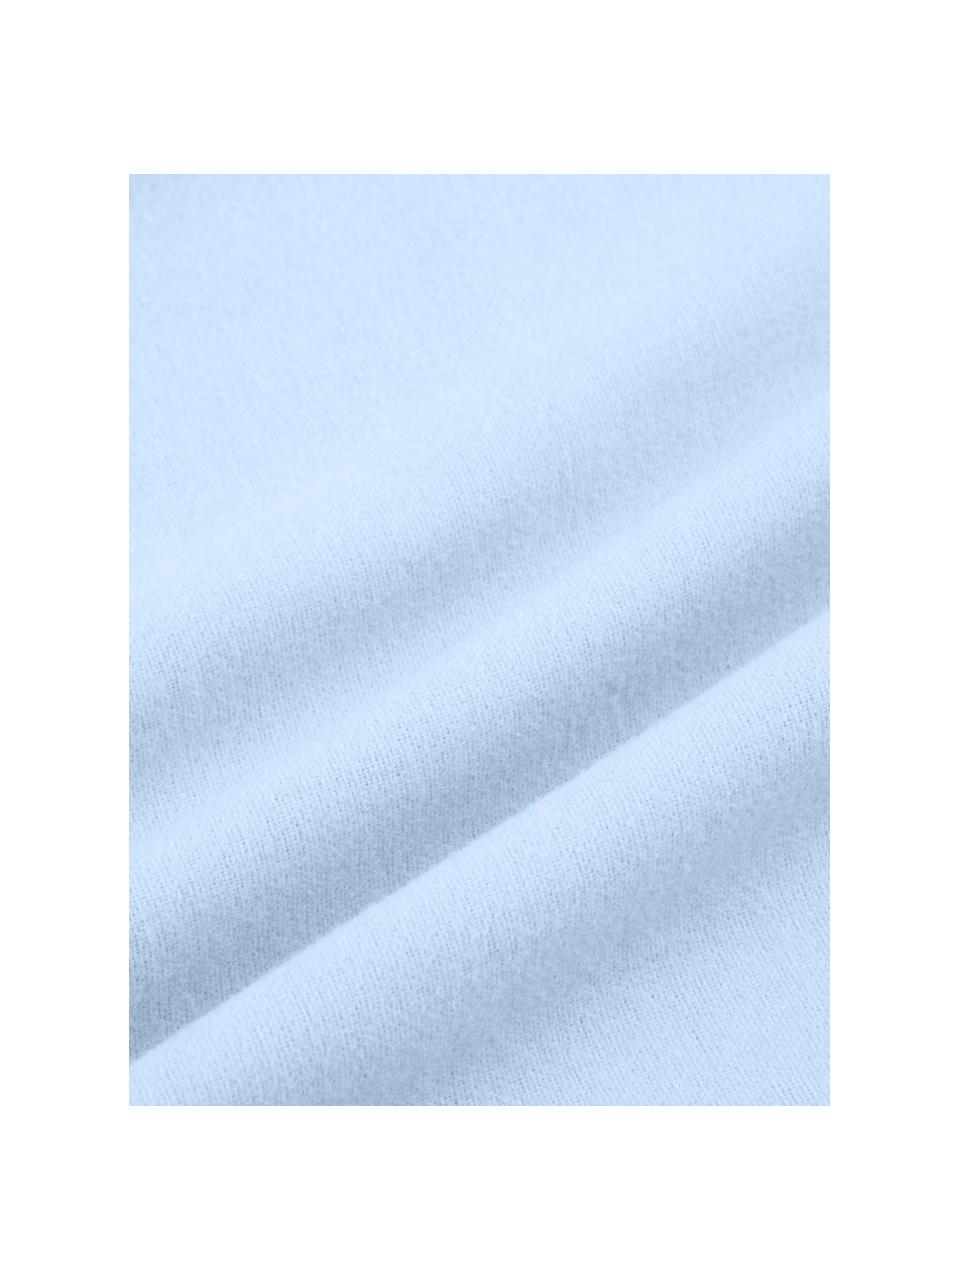 Flanell-Bettwäsche Erica, Webart: Flanell, Hellblau, 240 x 220 cm